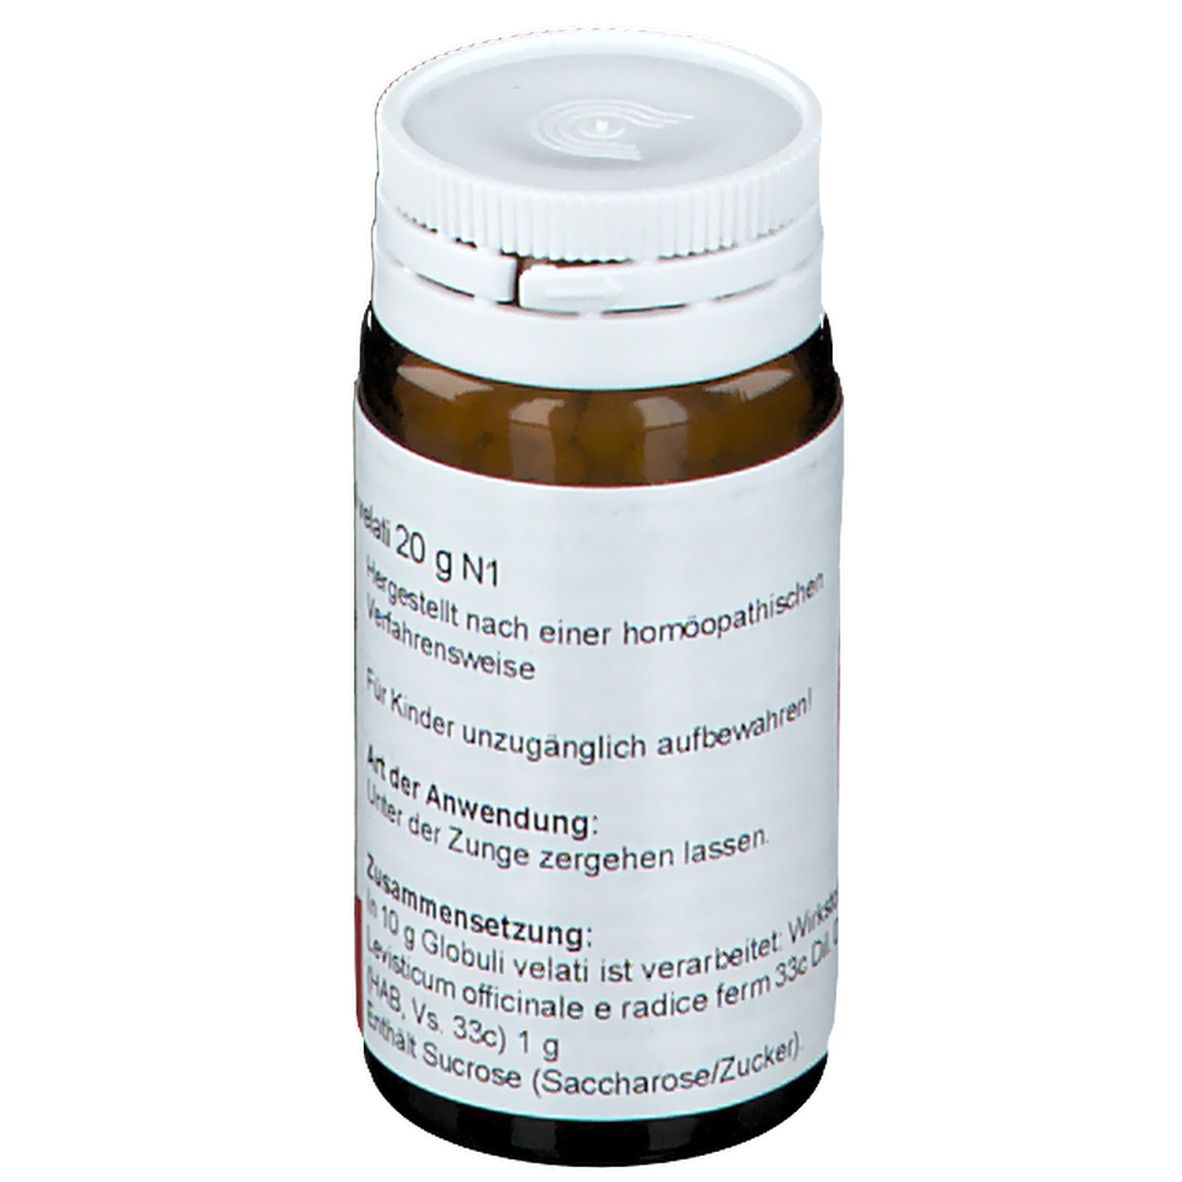 WALA® Levisticum E Radix D 3 Globuli